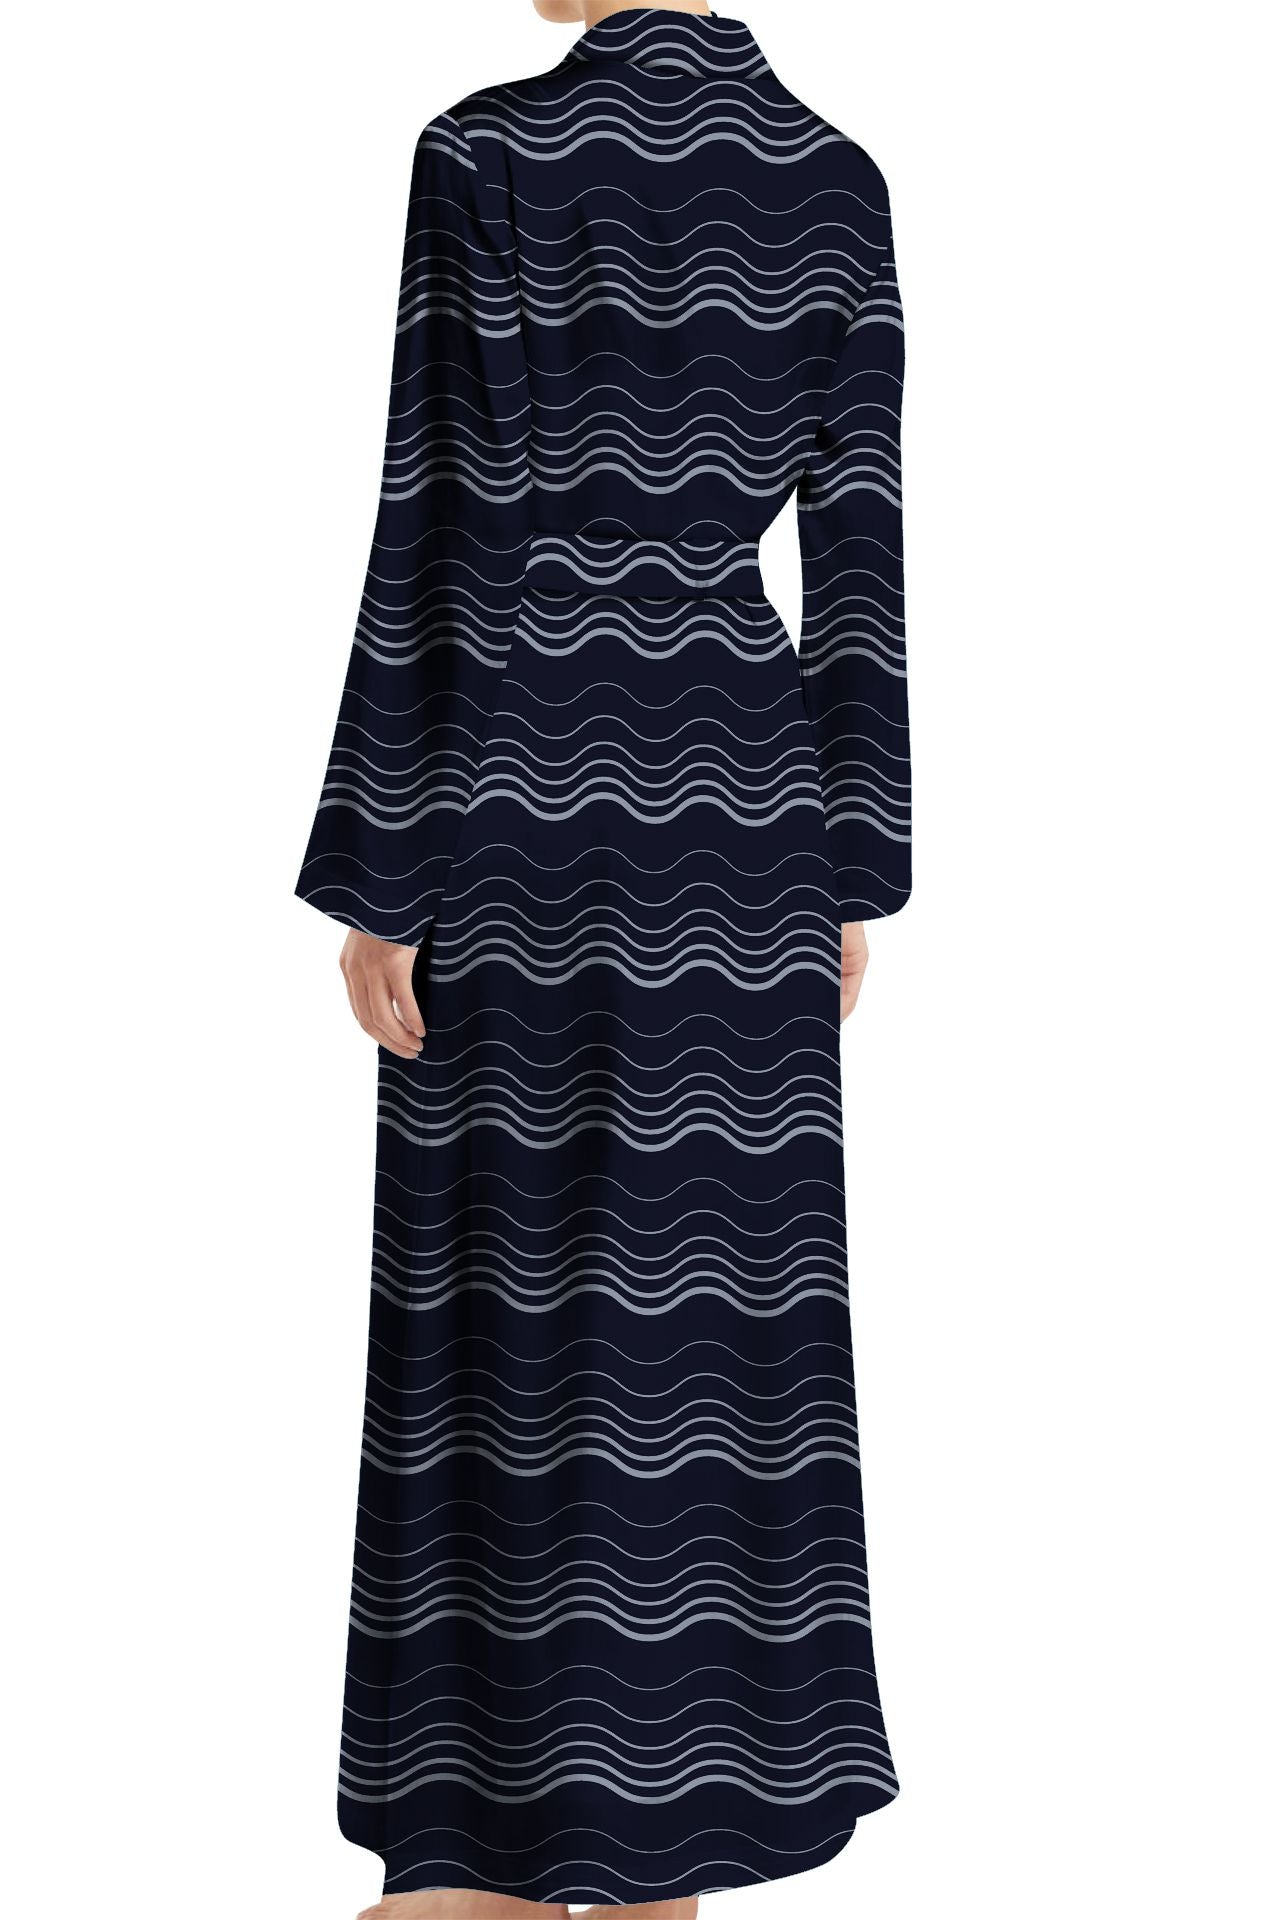 "printed wrap dress"  "Kyle X Shahida" "plus size wrap dress" "long black wrap dress"